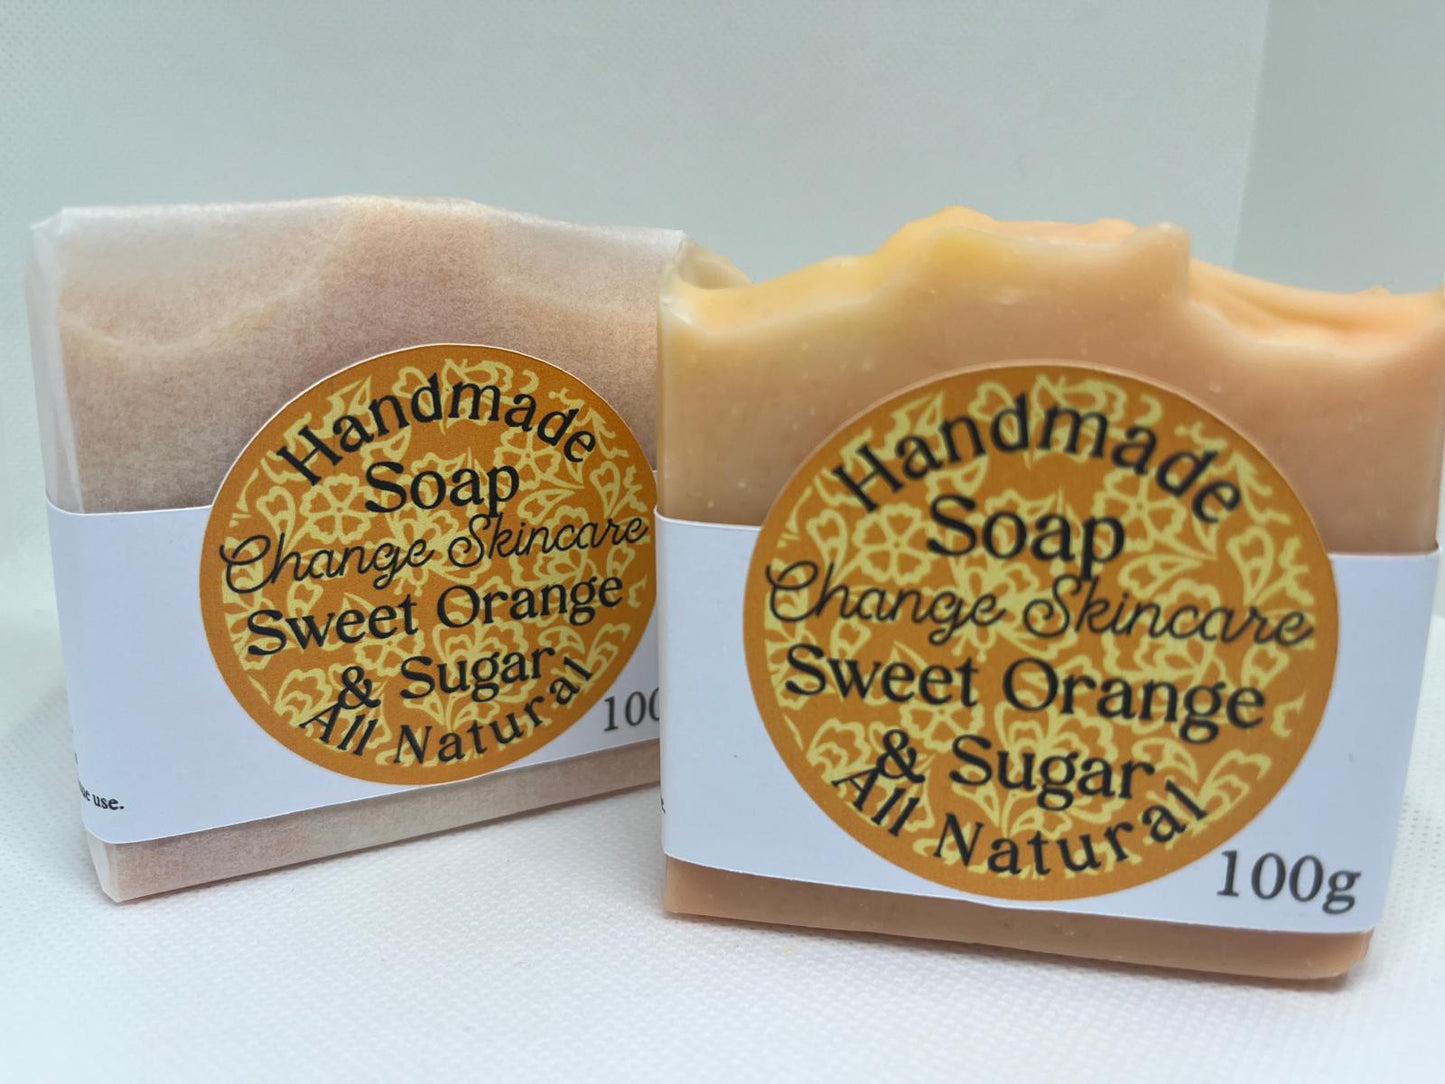 Sweet Orange & Sugar Natural Soap Bar